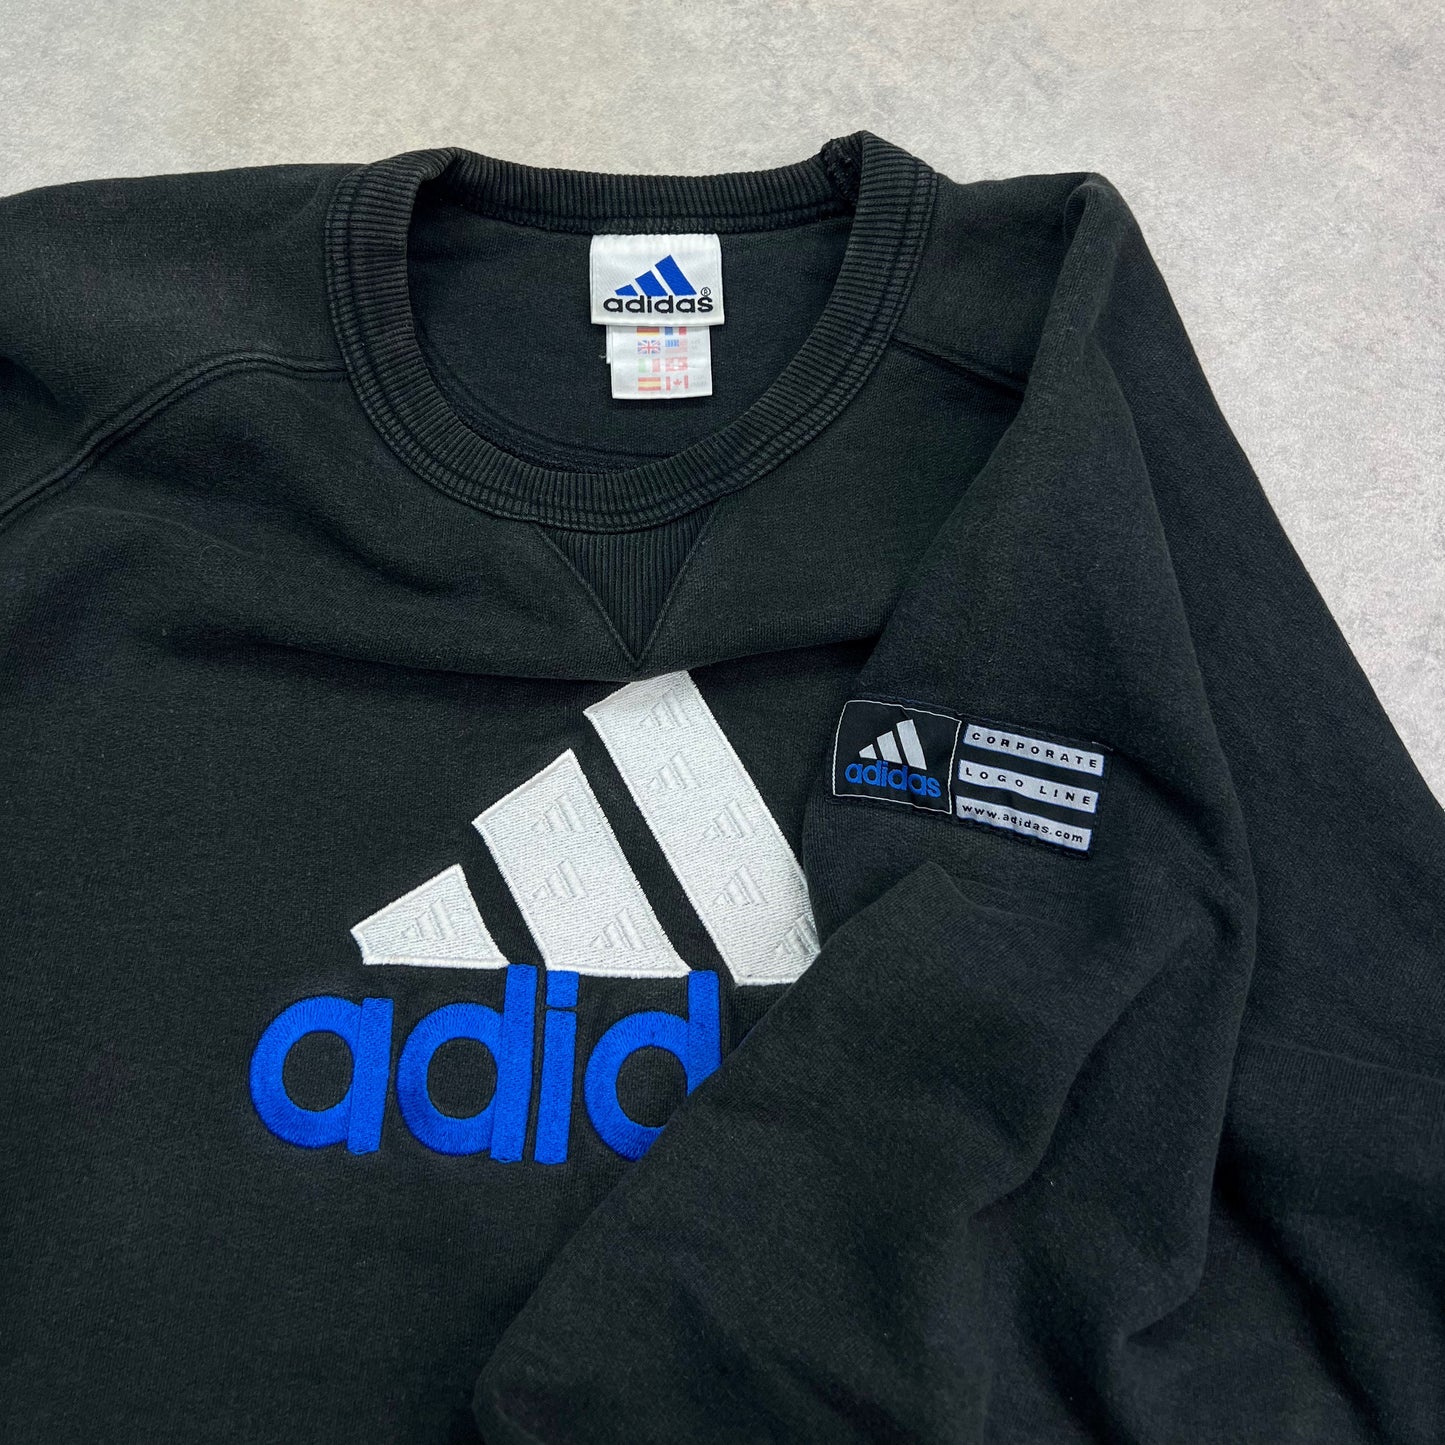 Adidas Rare Spellout Sweatshirt (M)